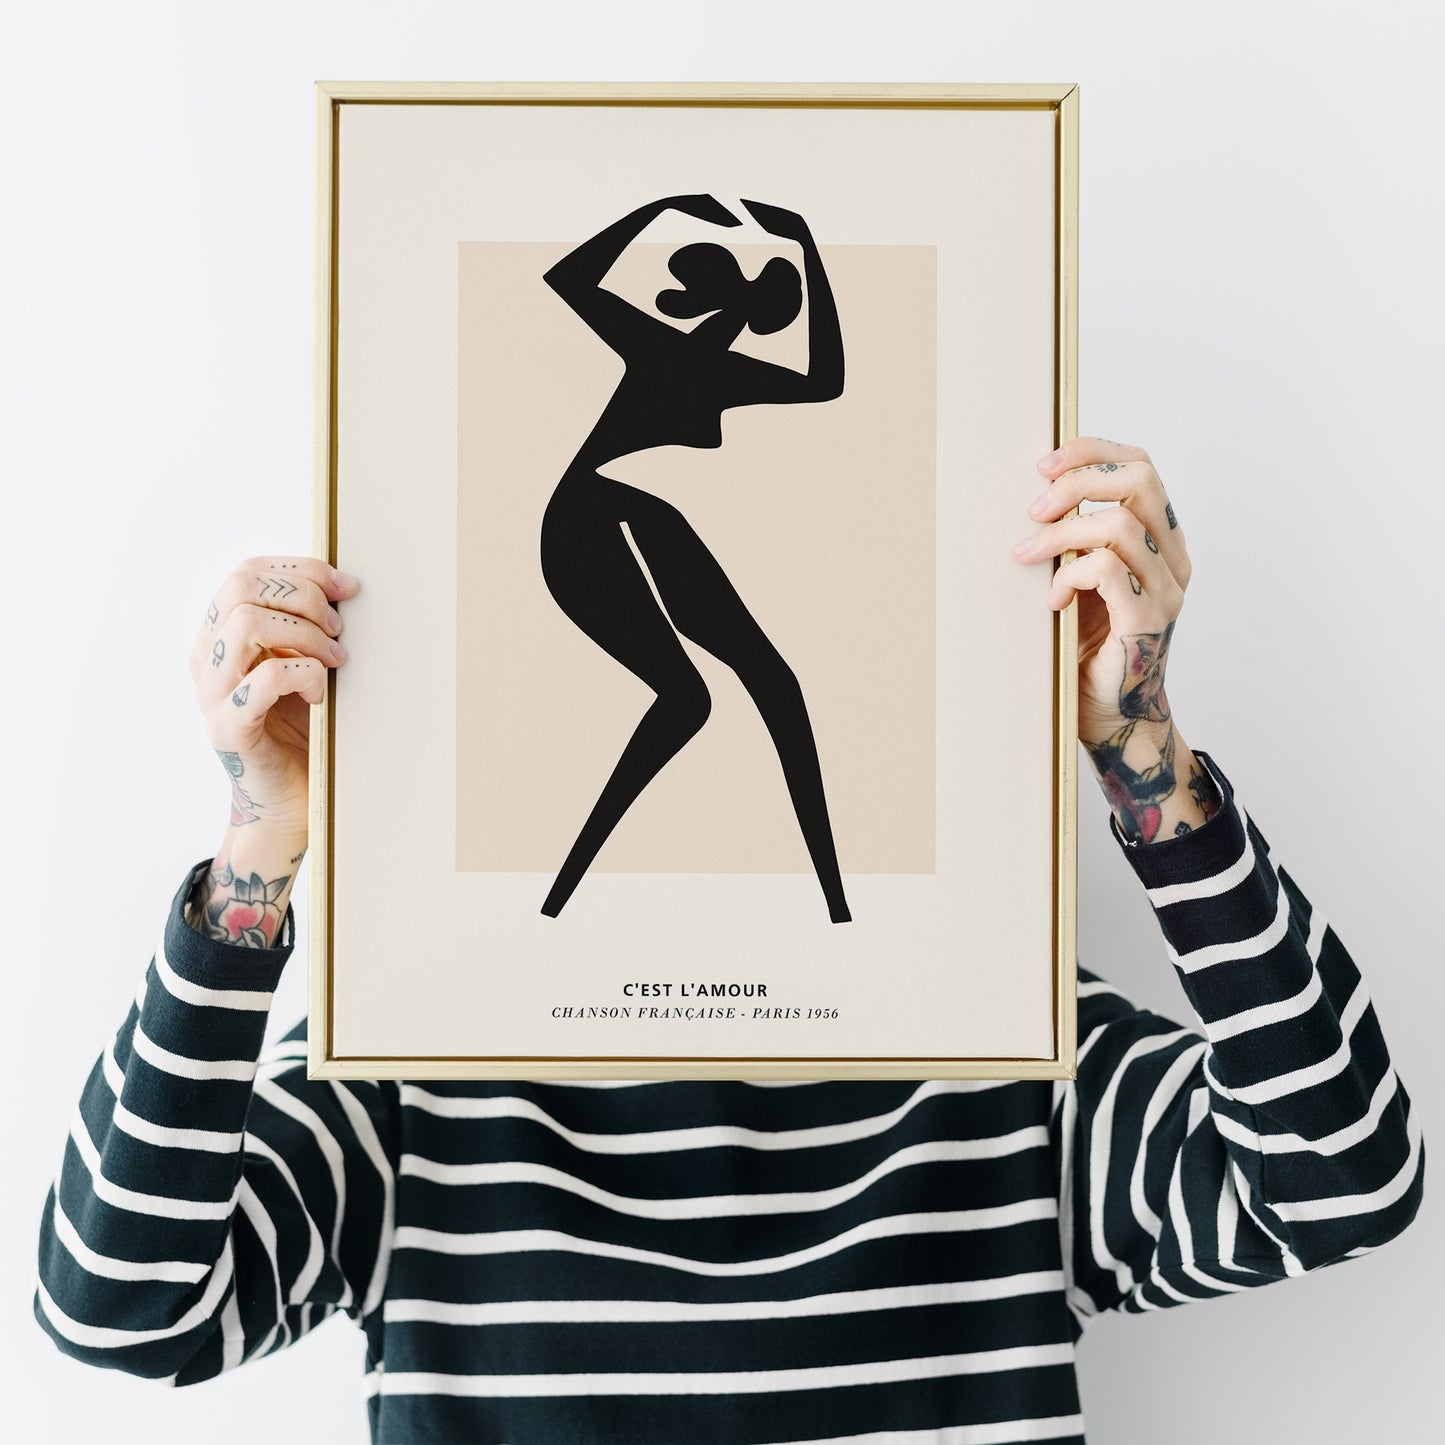 1956 Paris - French Fashion Poster